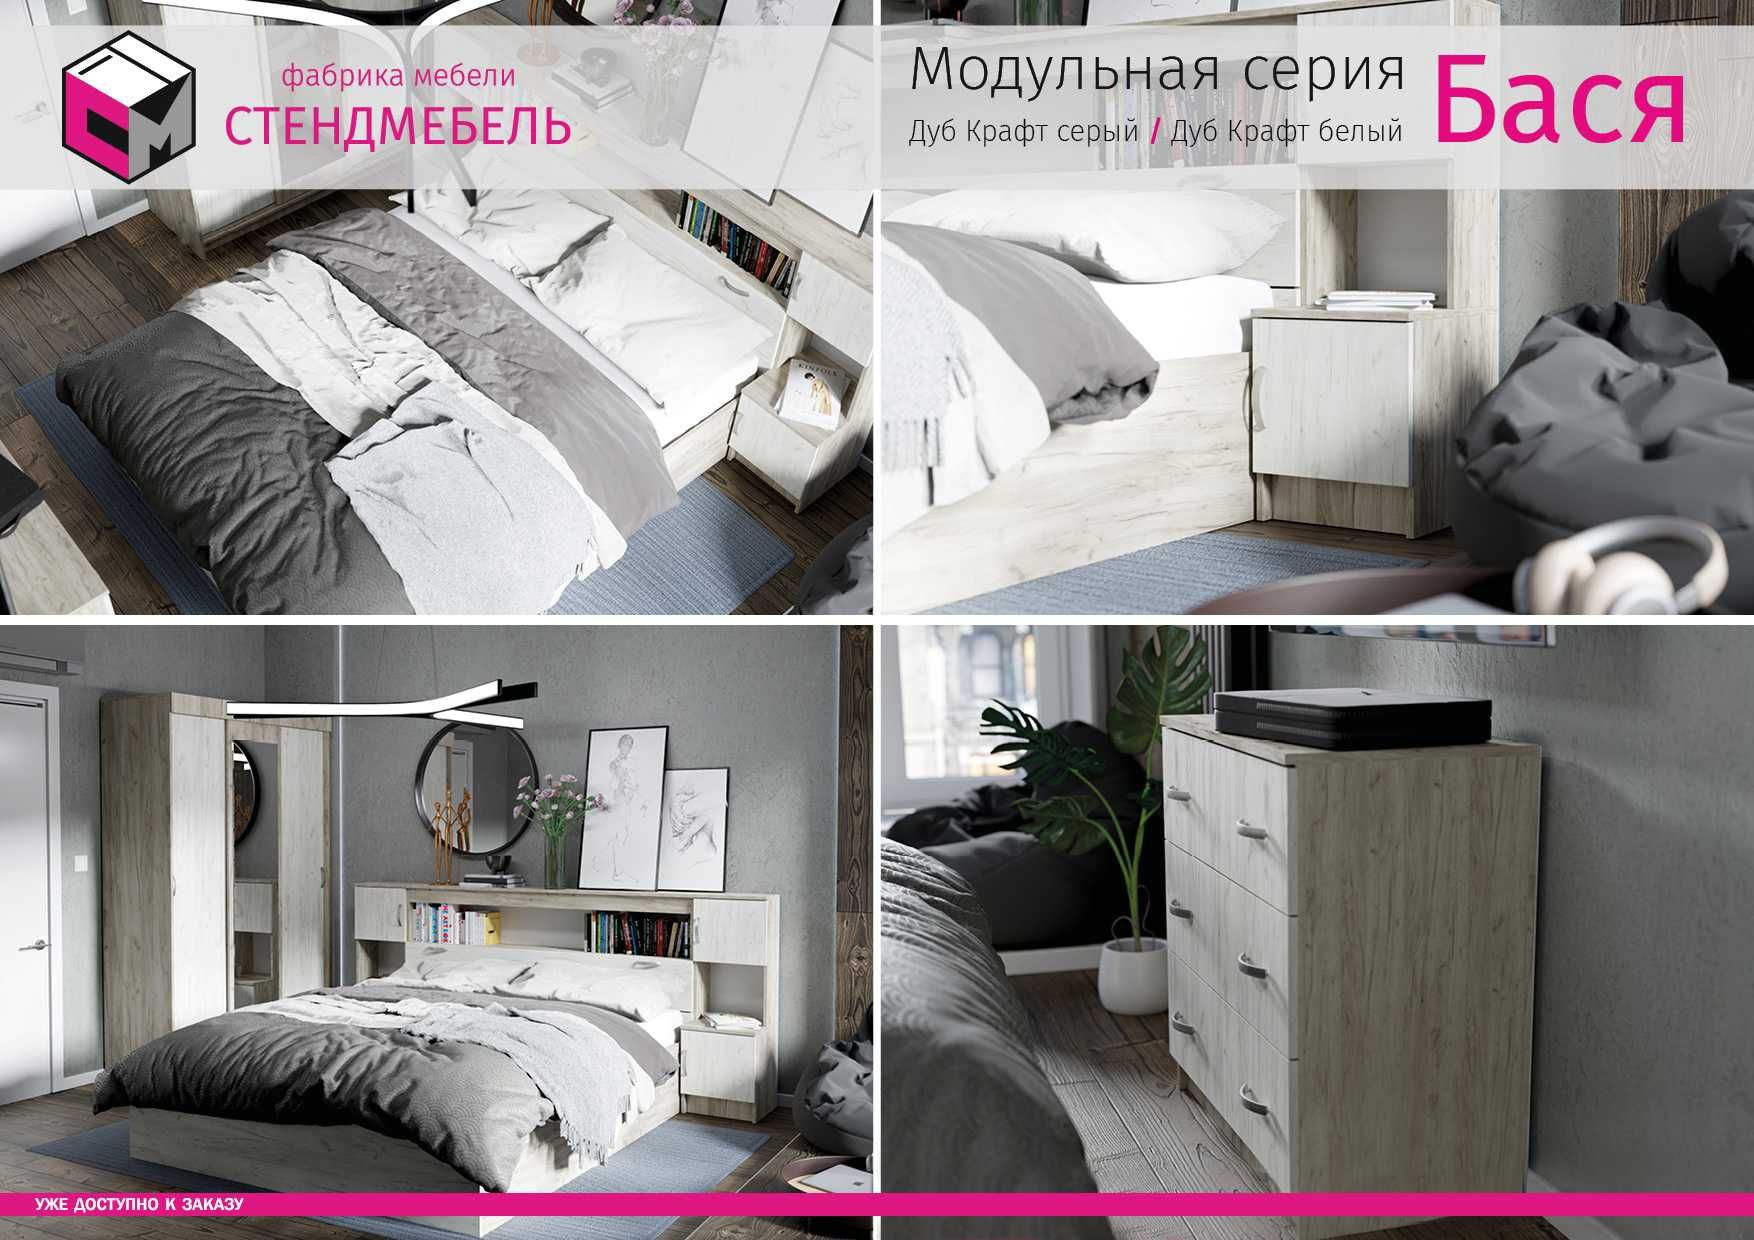 Супер цена! Новая спальня Бася. Россия